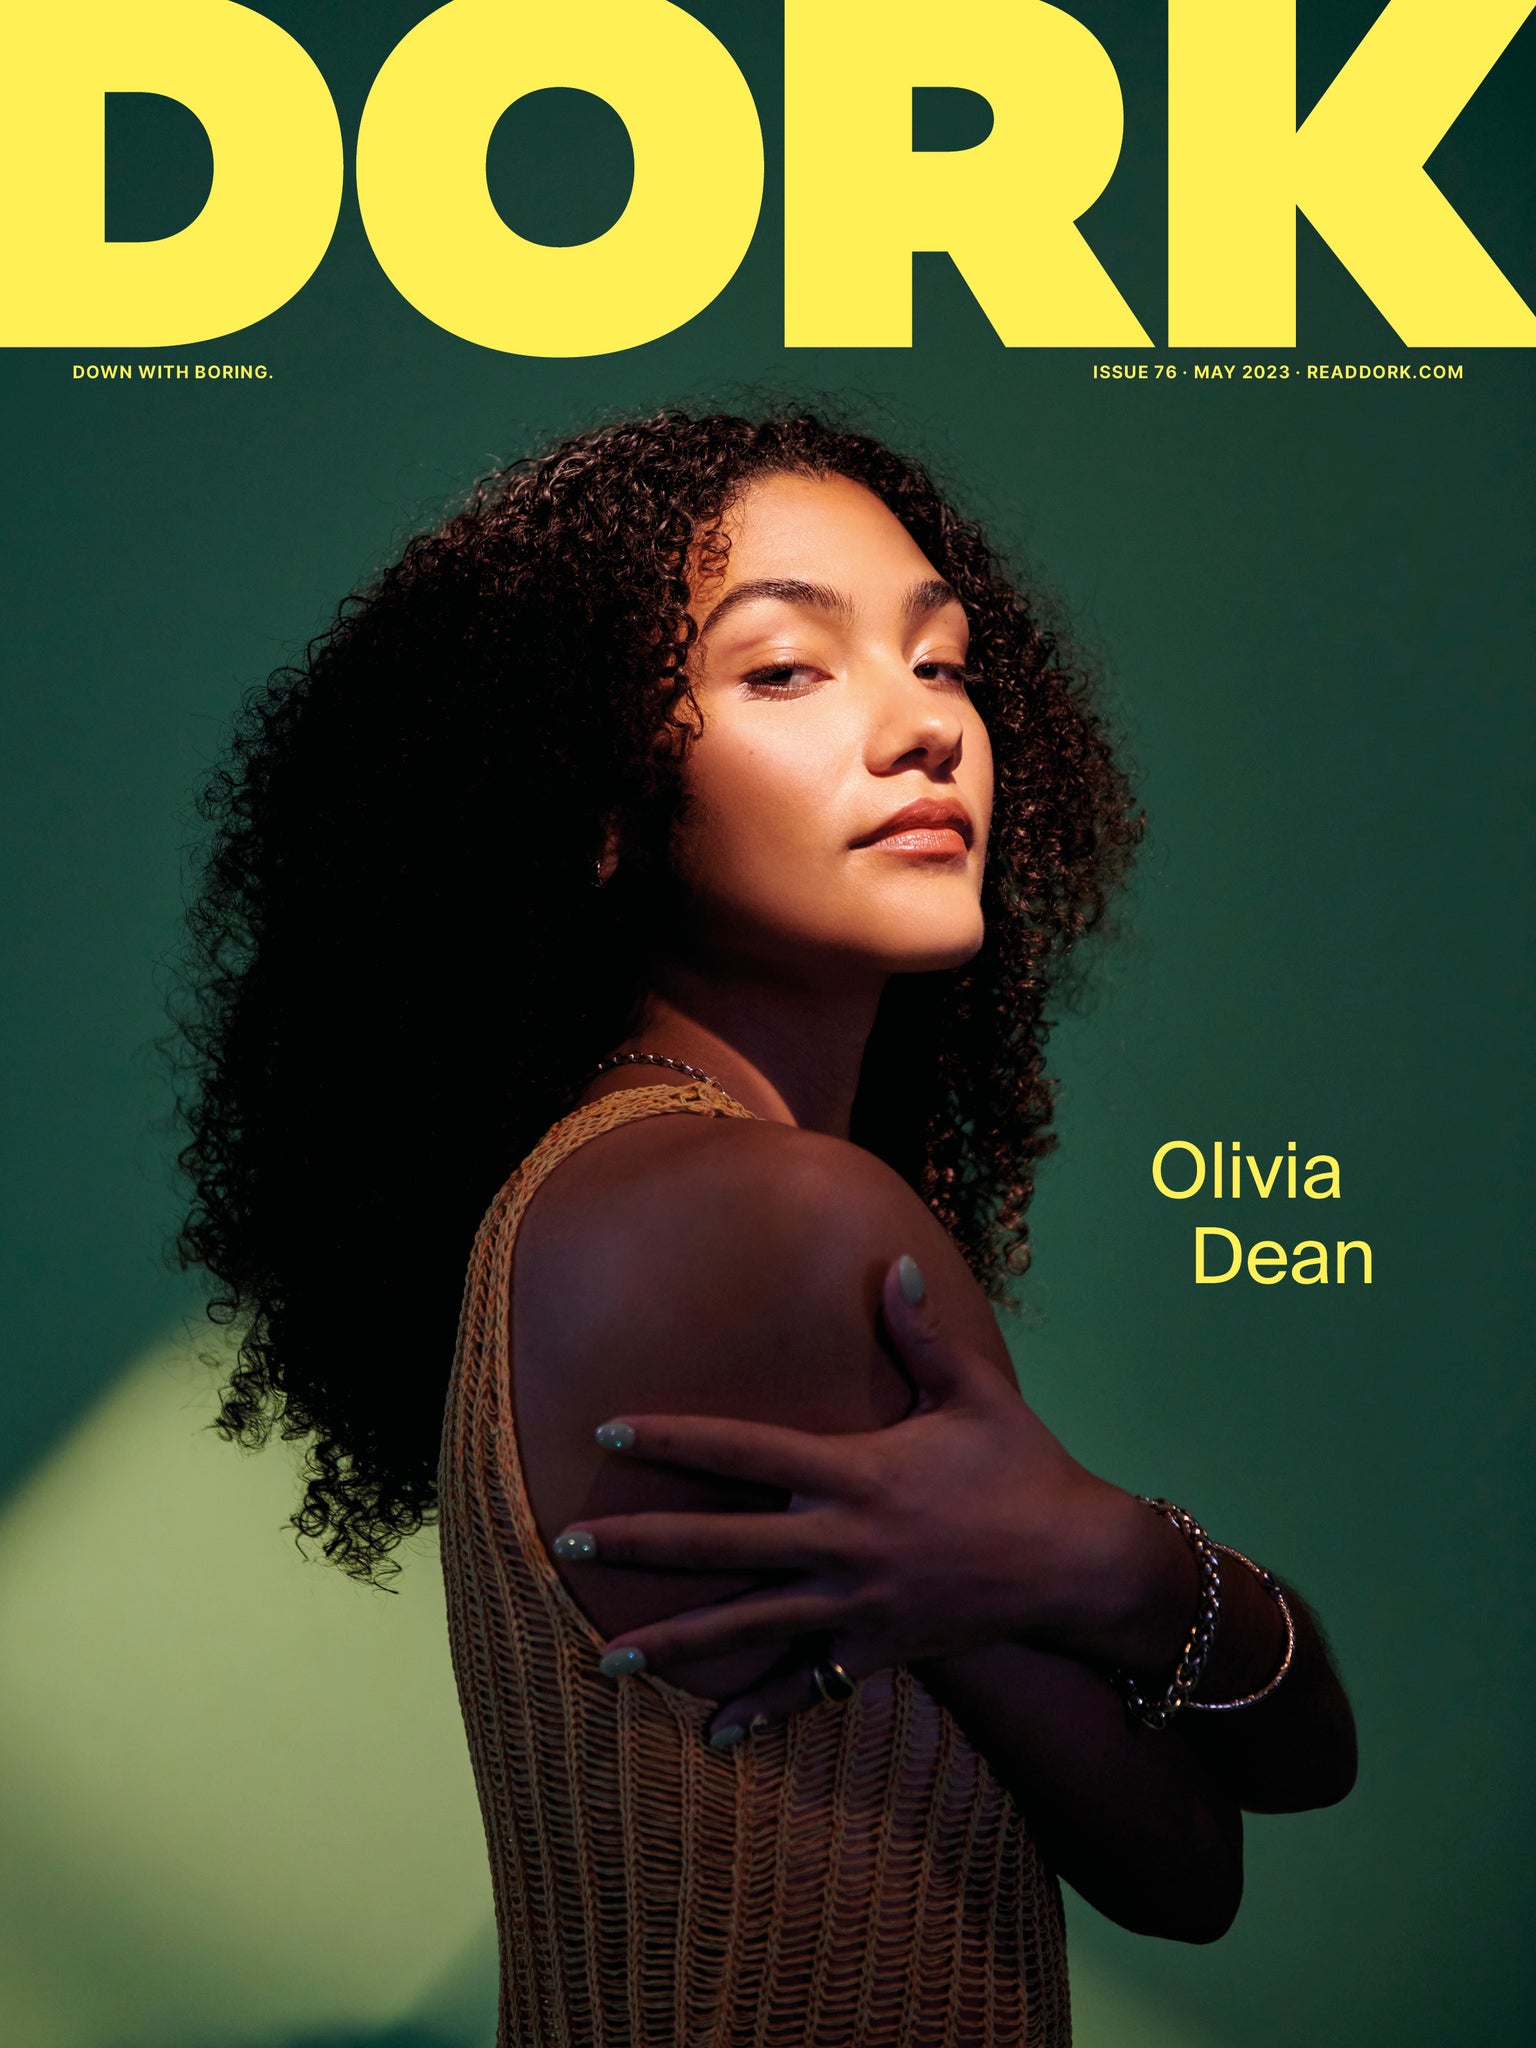 Dork, May 2023 (Olivia Dean cover)